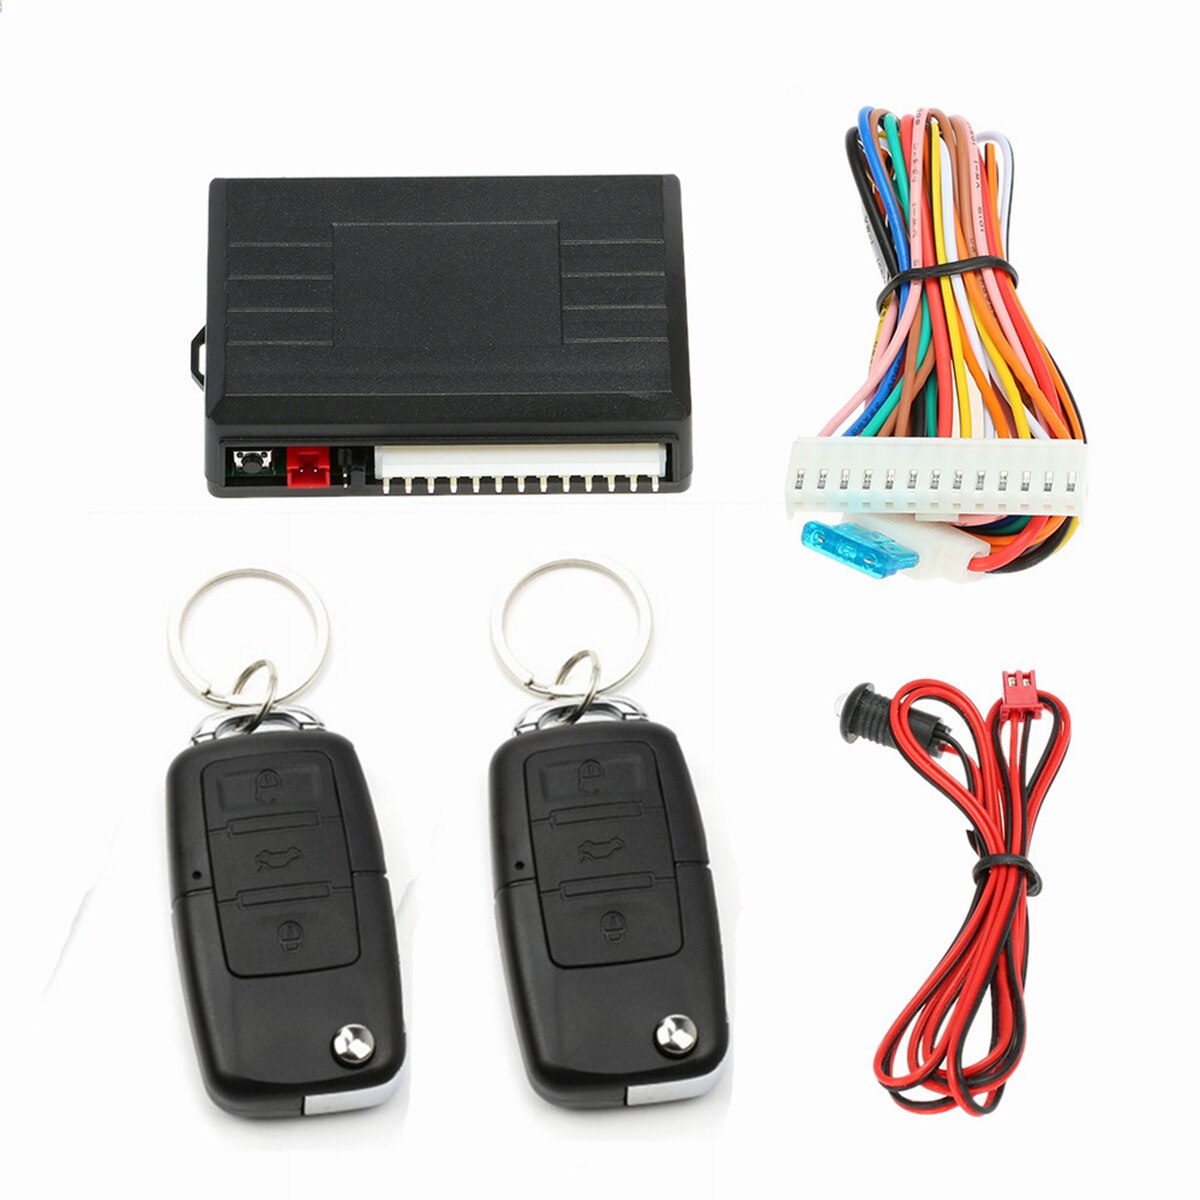 Universal auto alarmsystemer bil fjernbetjening centralsæt dørlås låsning køretøj nøglefri adgangssystem med fjernbetjening